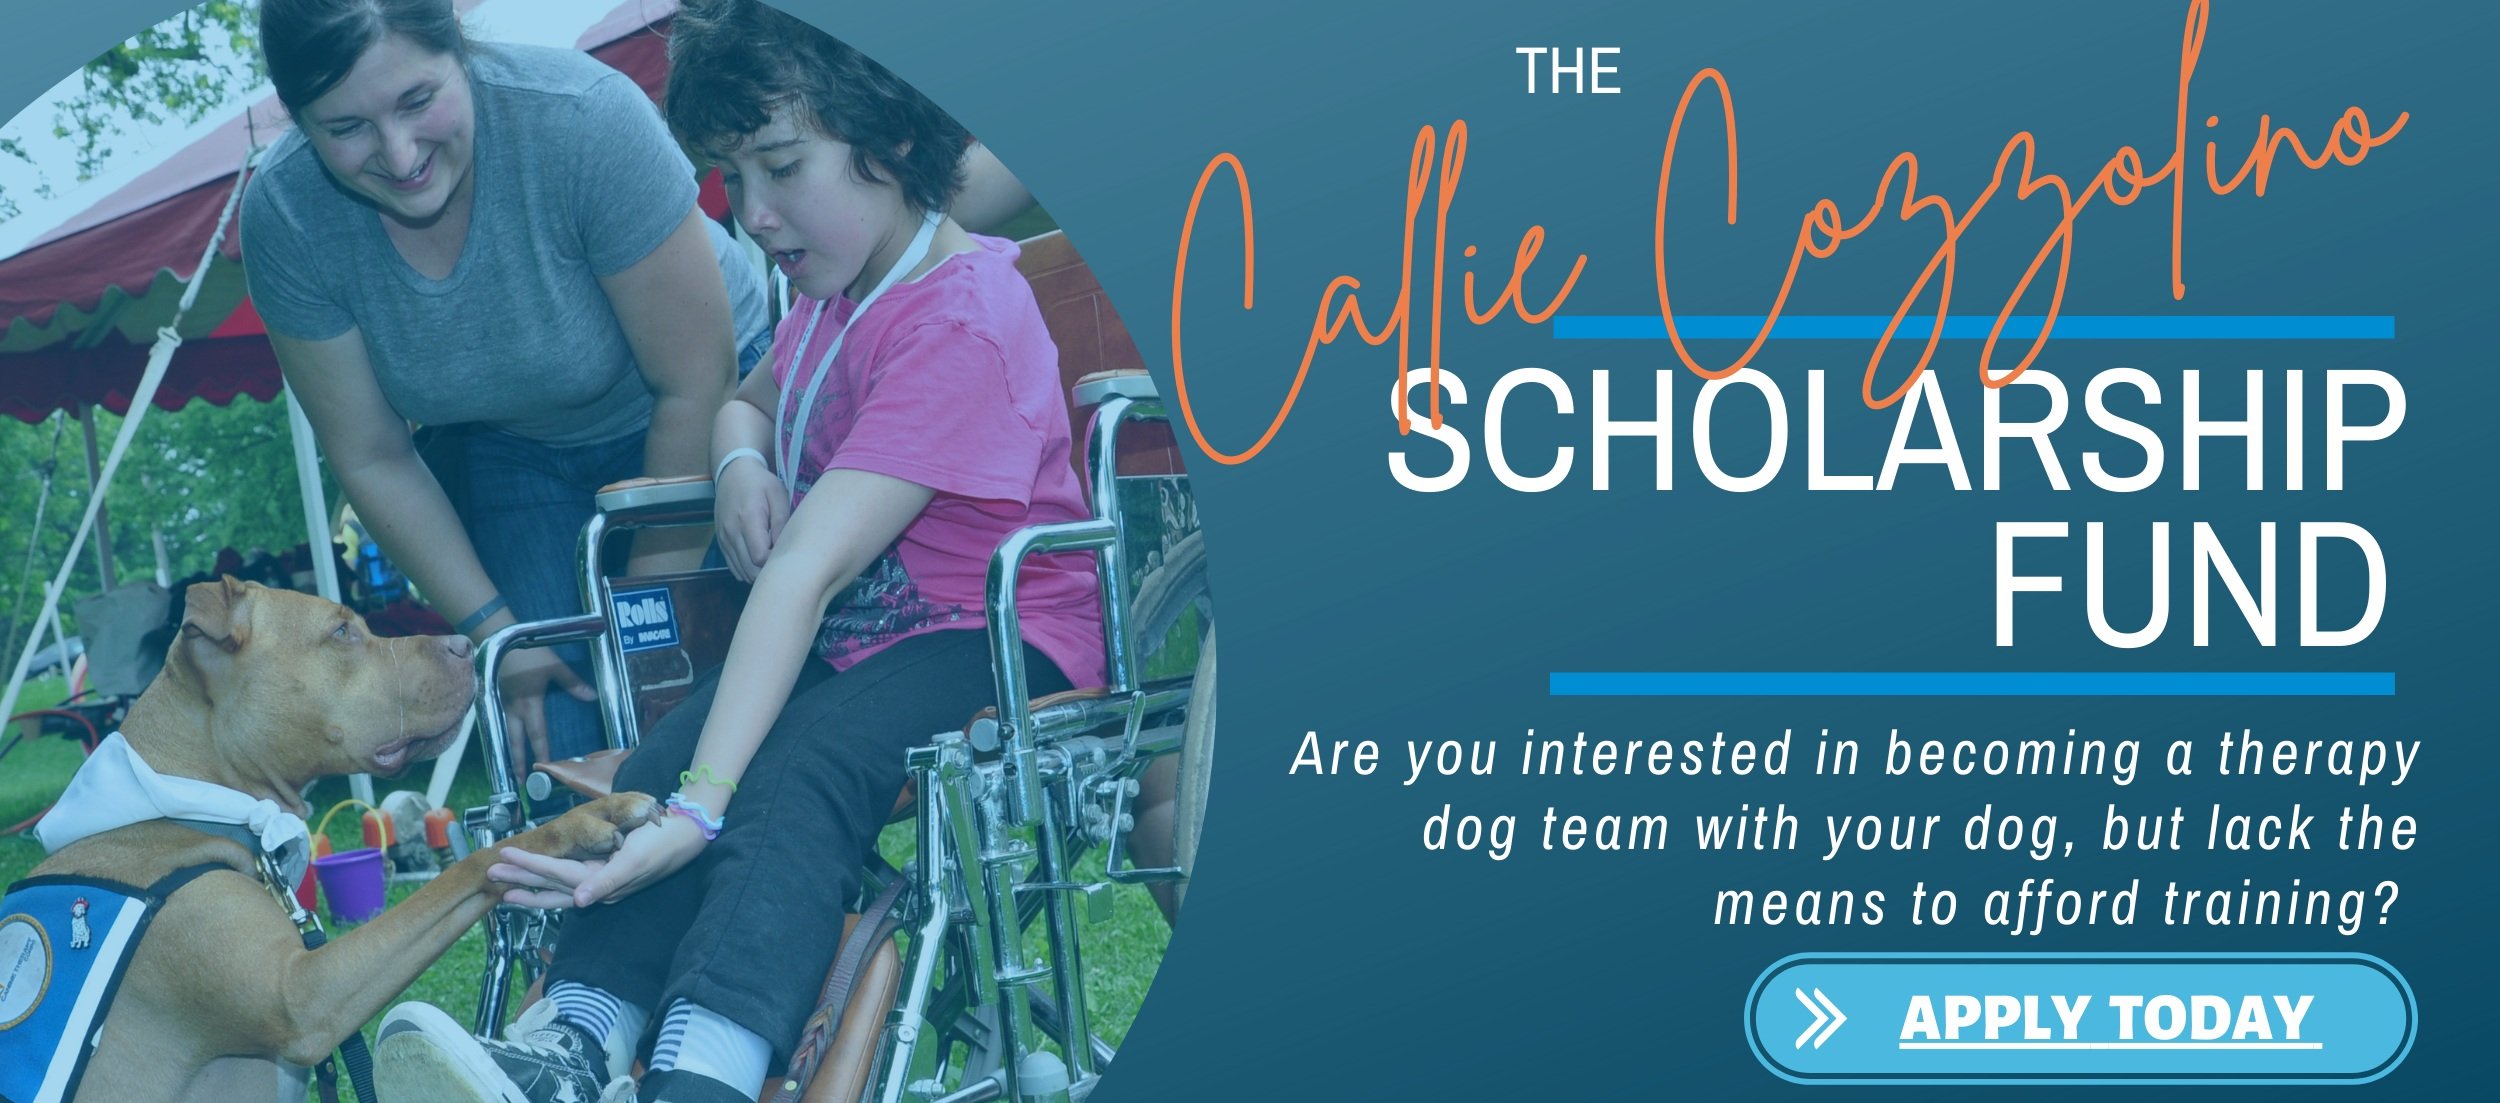 Callie+Cozzolino+Scholarship+Fund+%282500+%C3%97+1103+px%29+%285%29.jpg